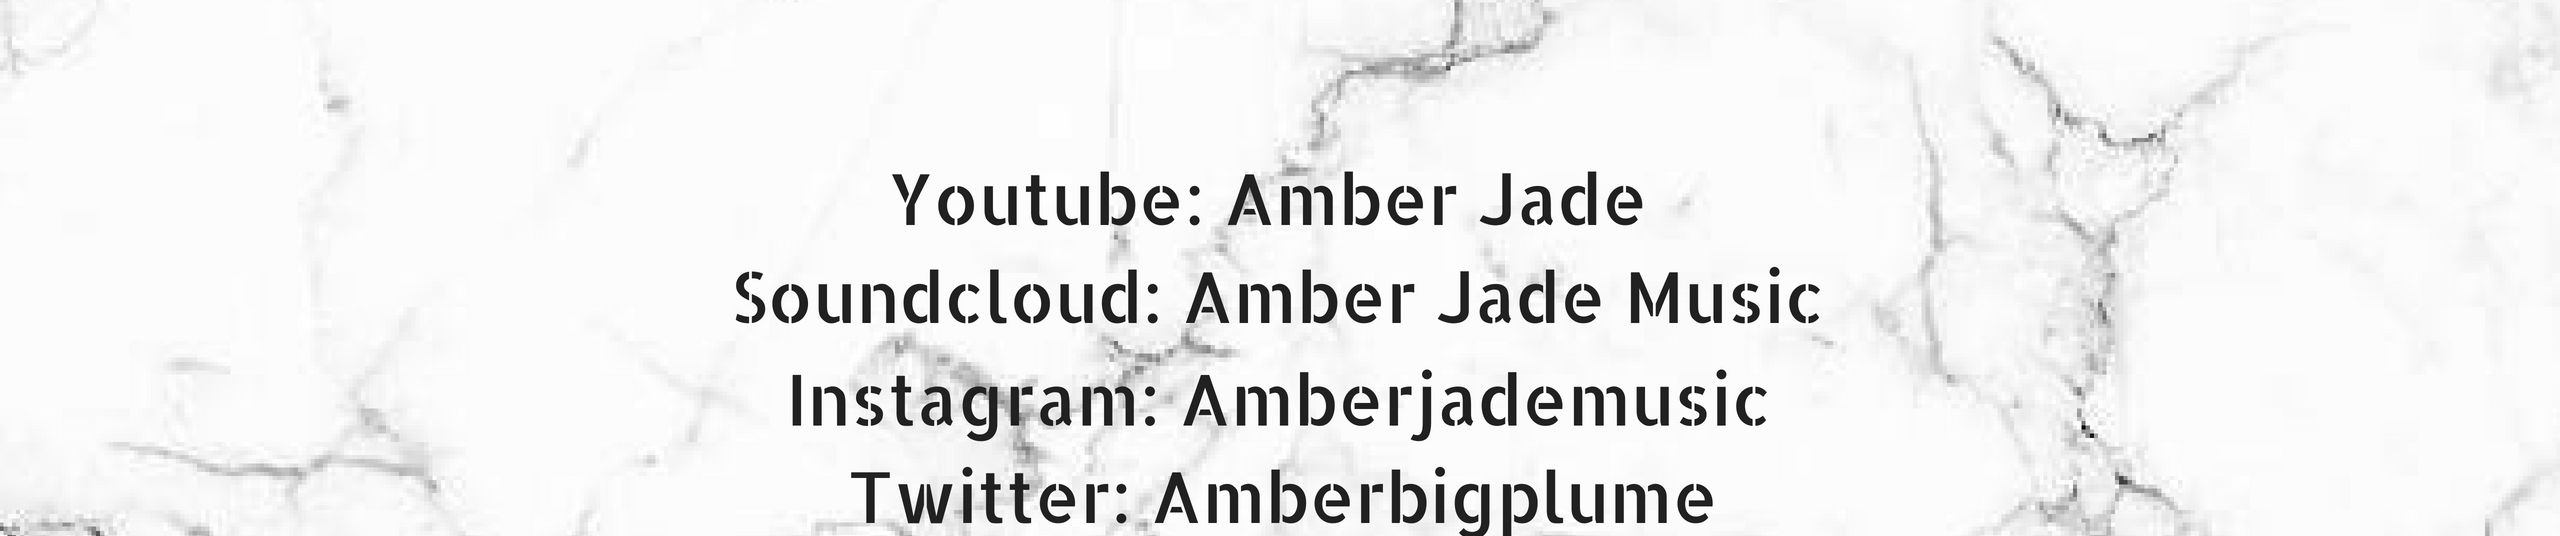 Amber jade twitter